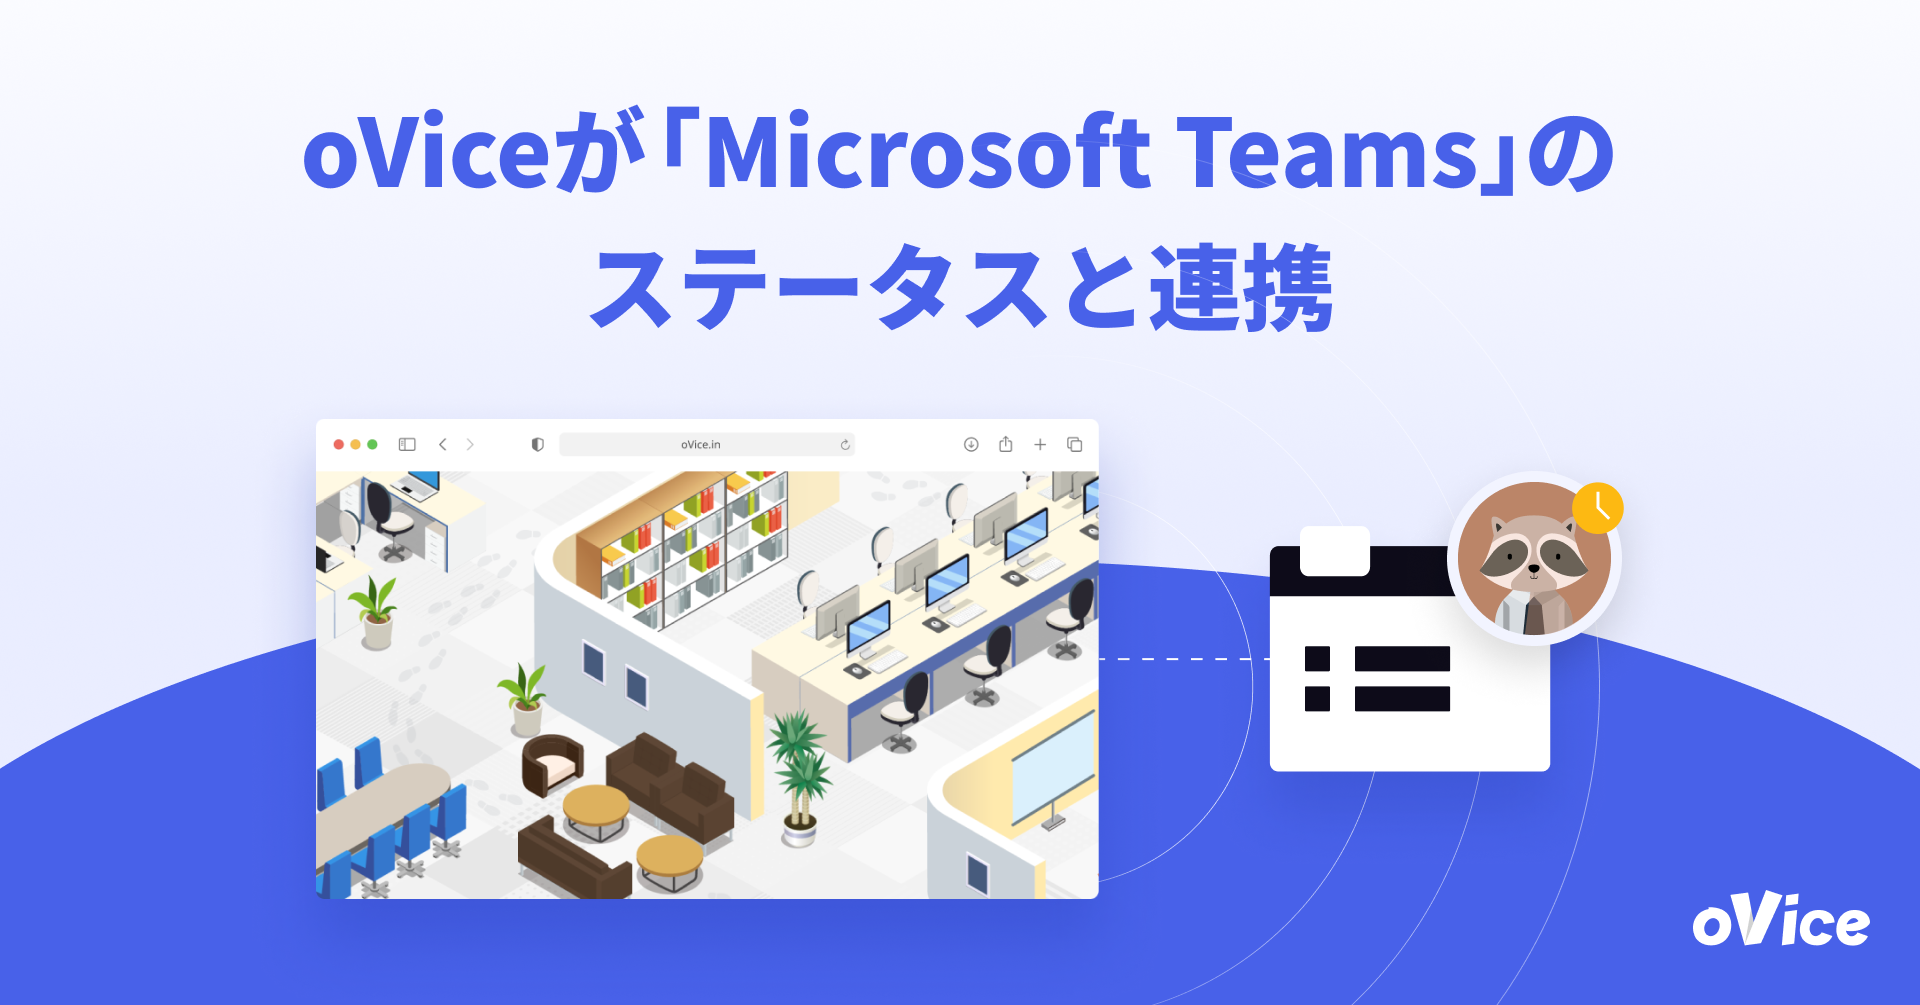 「Microsoft Teams」のステータスと連携